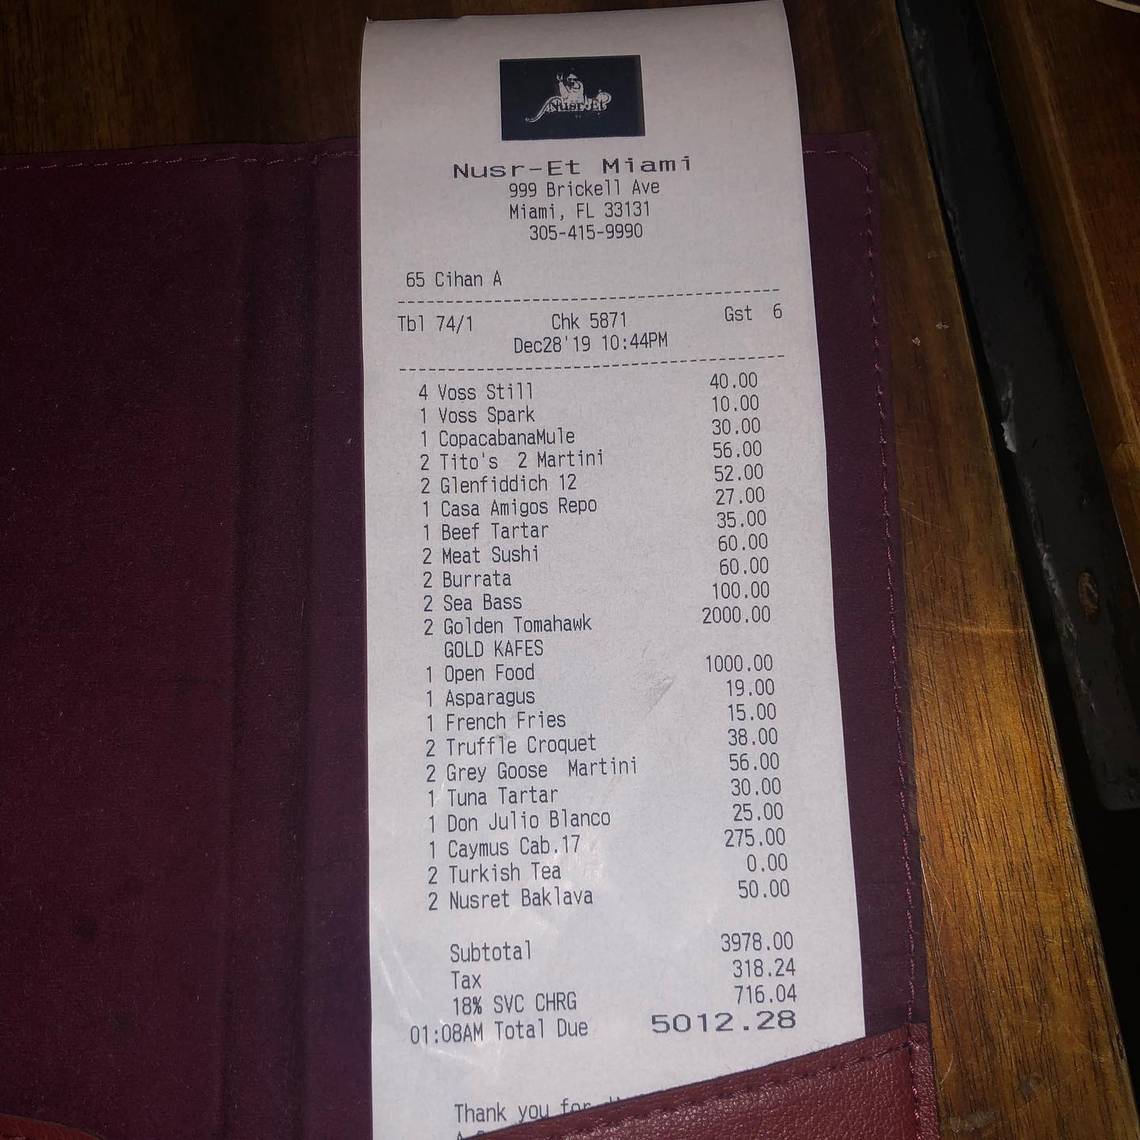 Ricevuta da 5000 dollari in un ristorante Nusr-Et